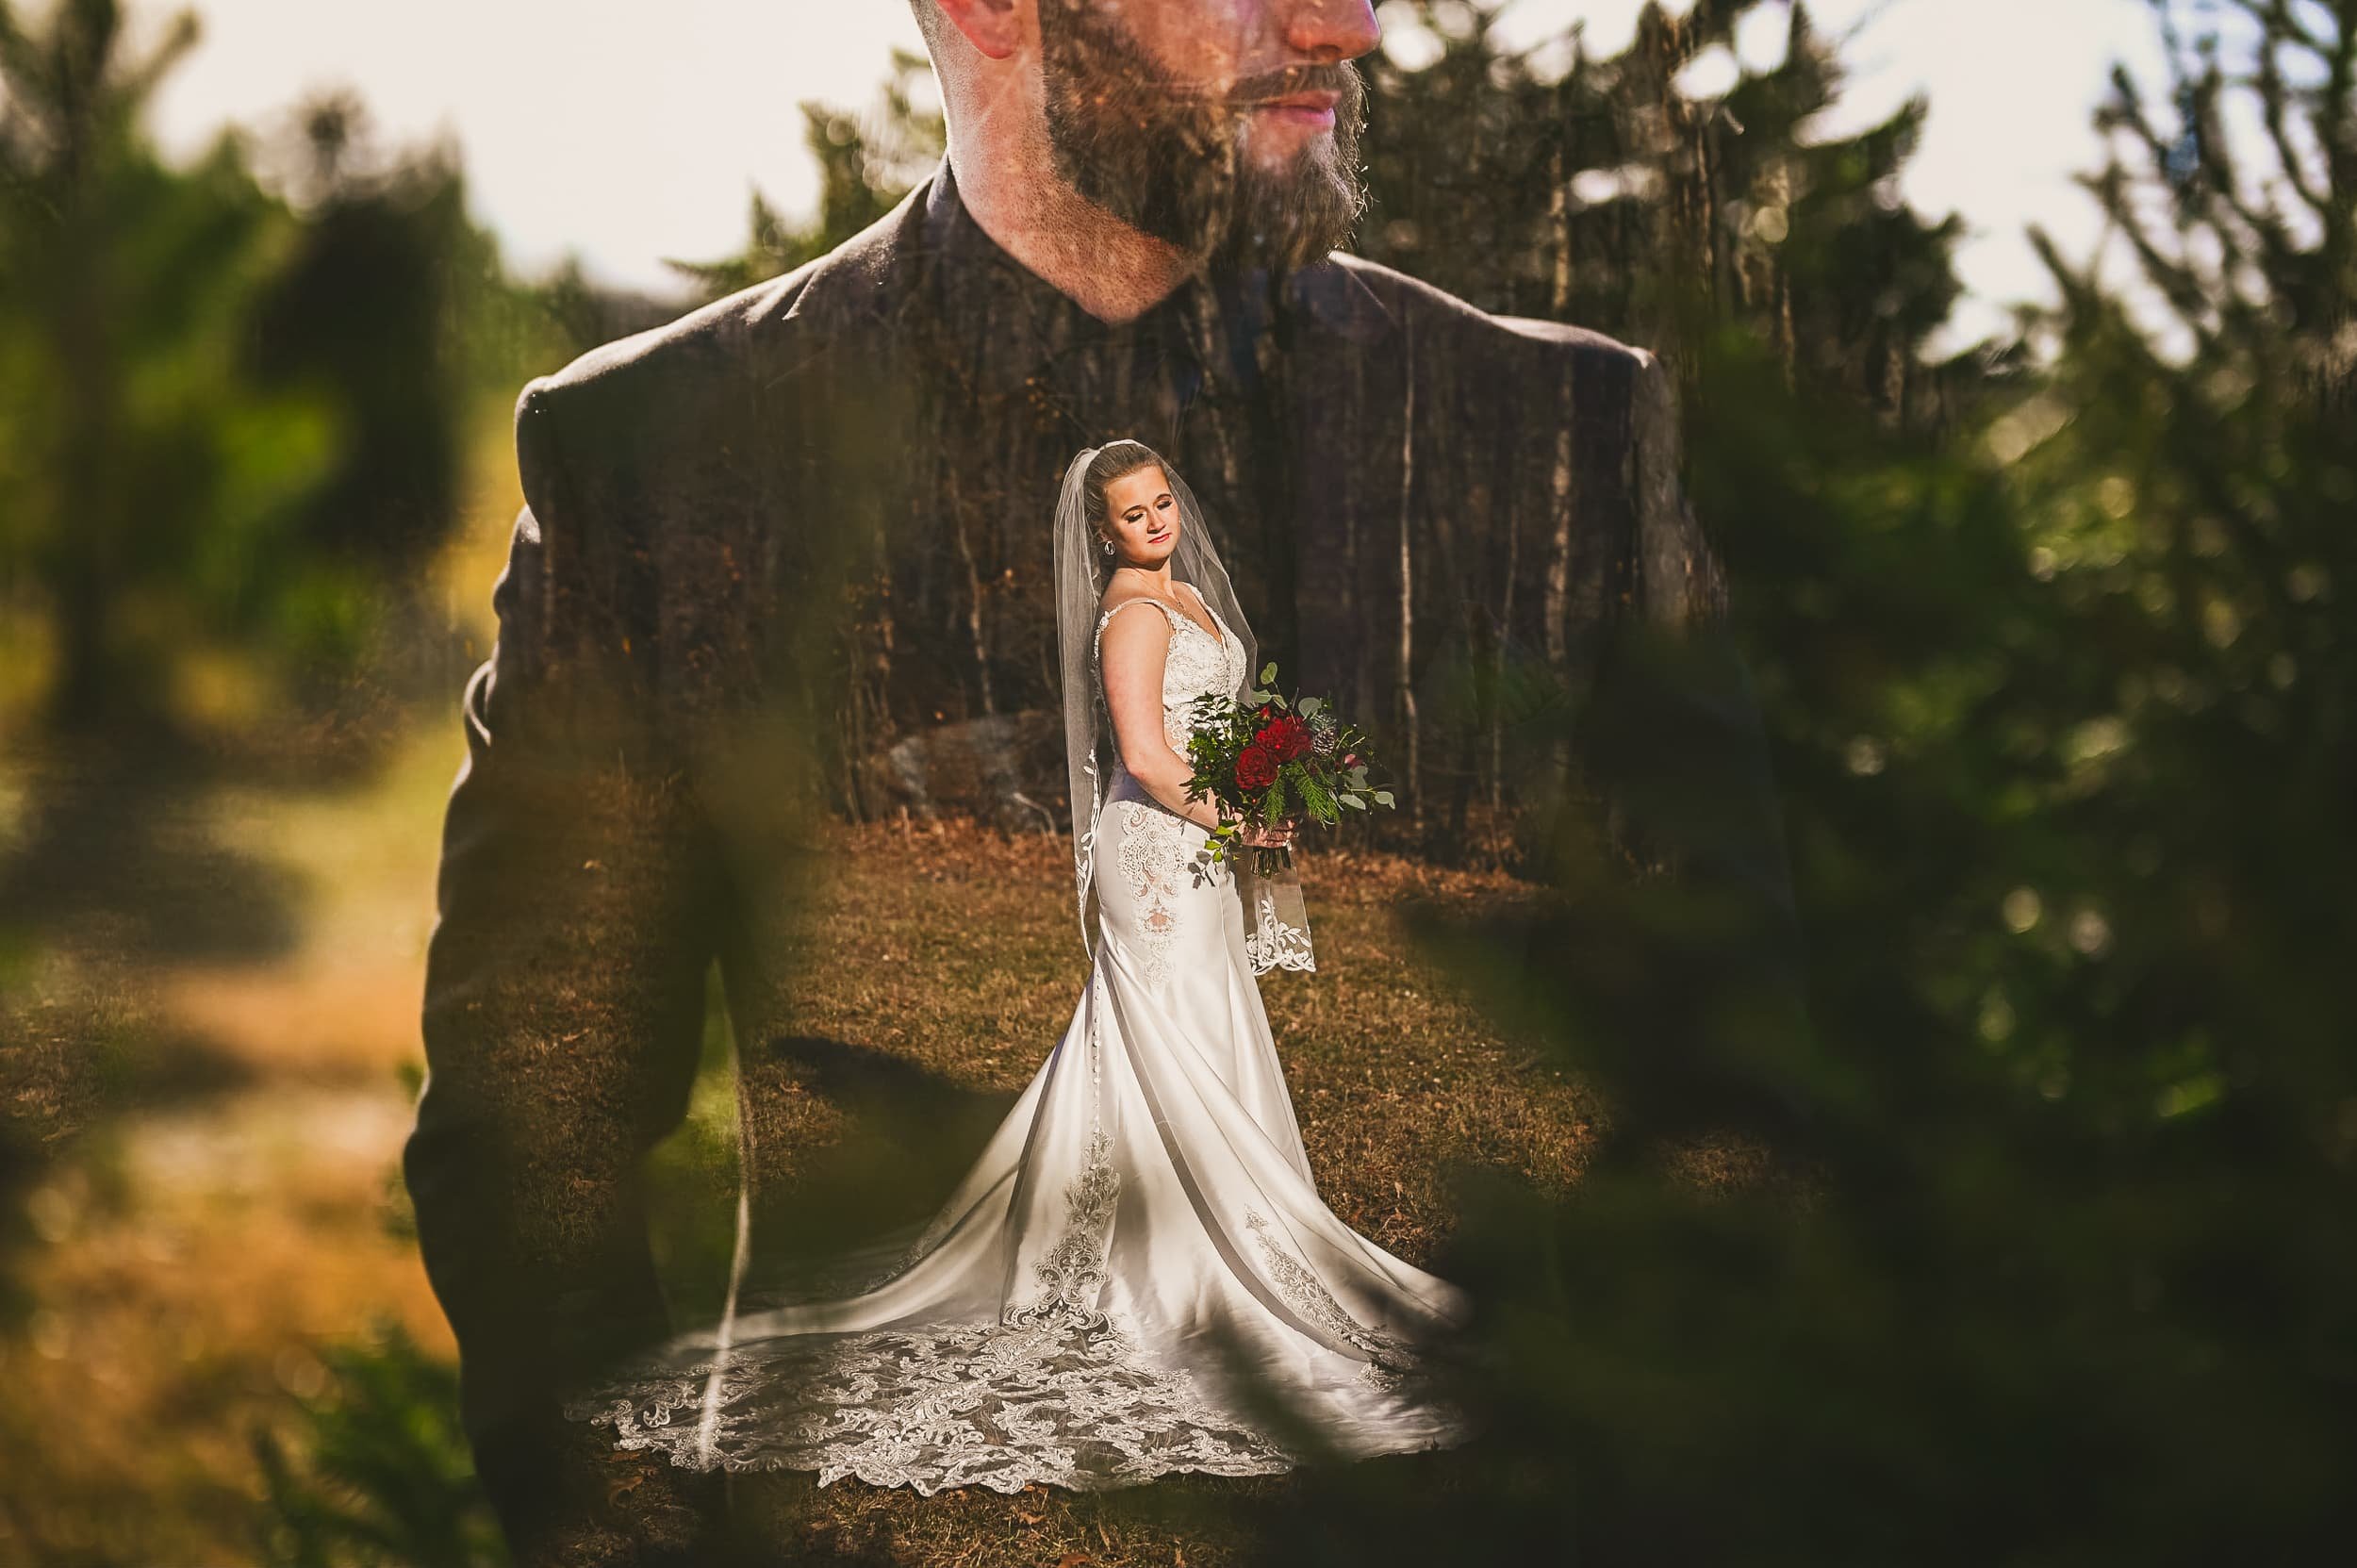 st louis wedding photographer 2022 year review-100.jpg